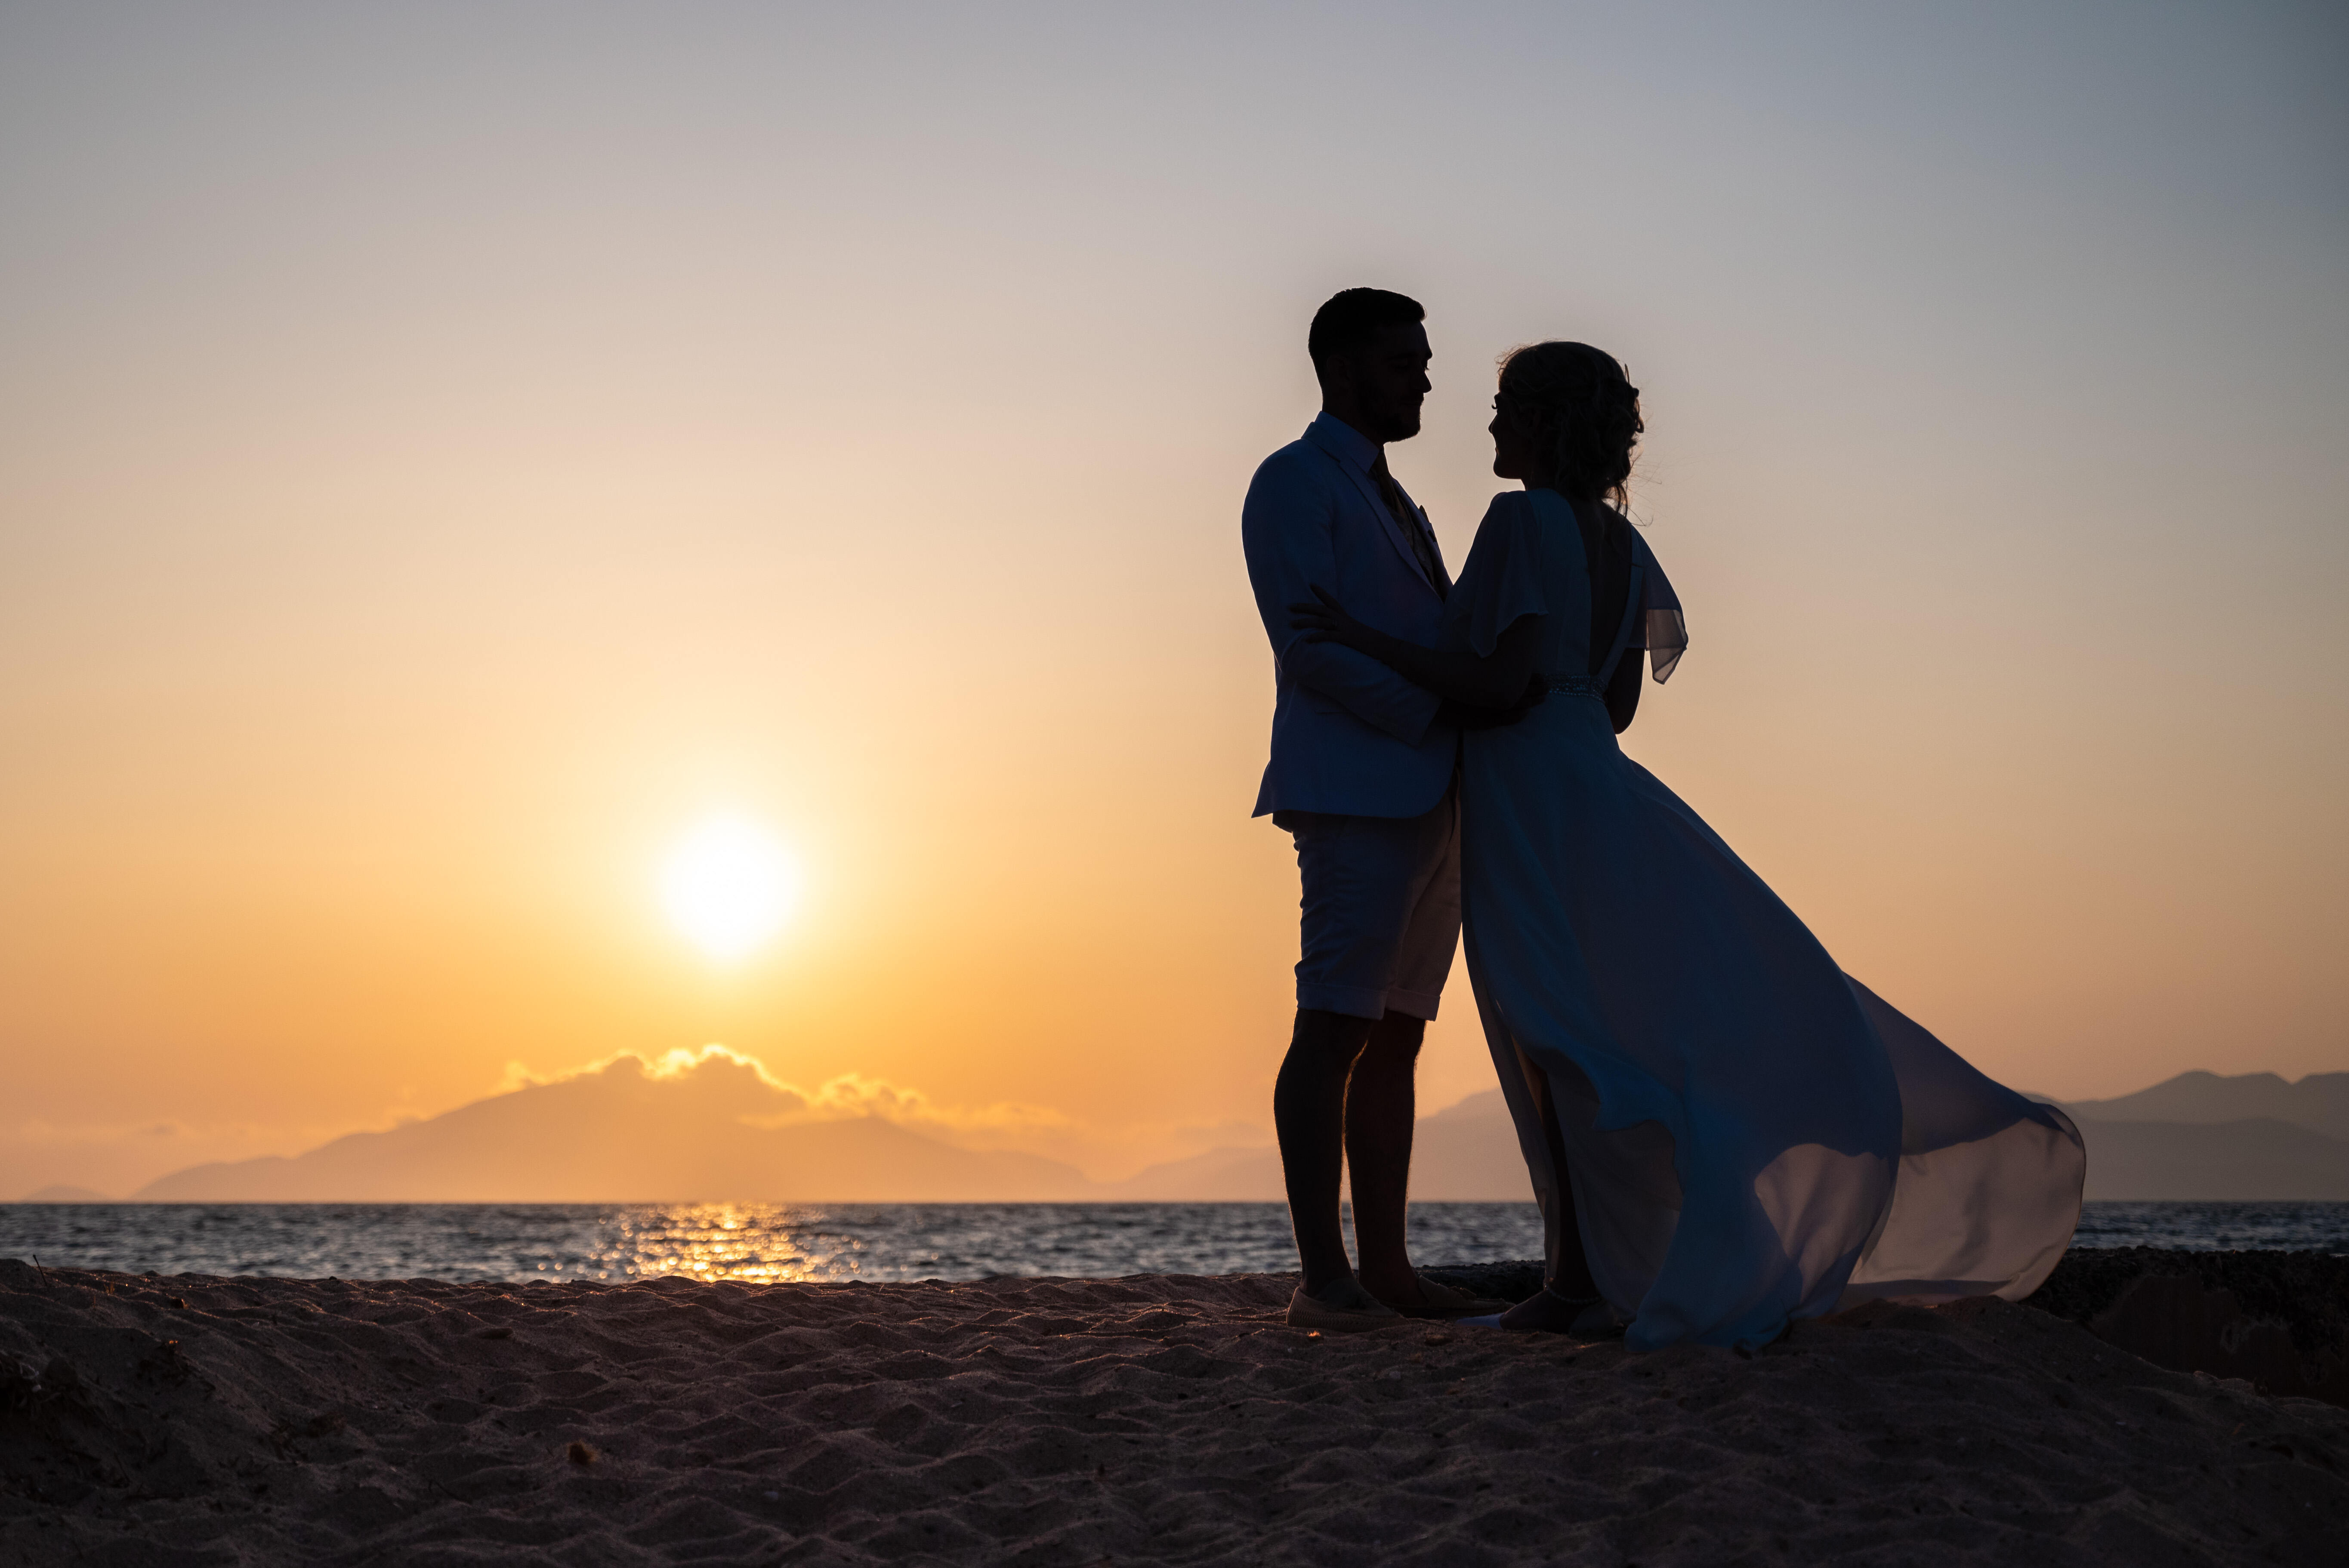 Book your wedding day in Atlantica Marmari Beach Kos